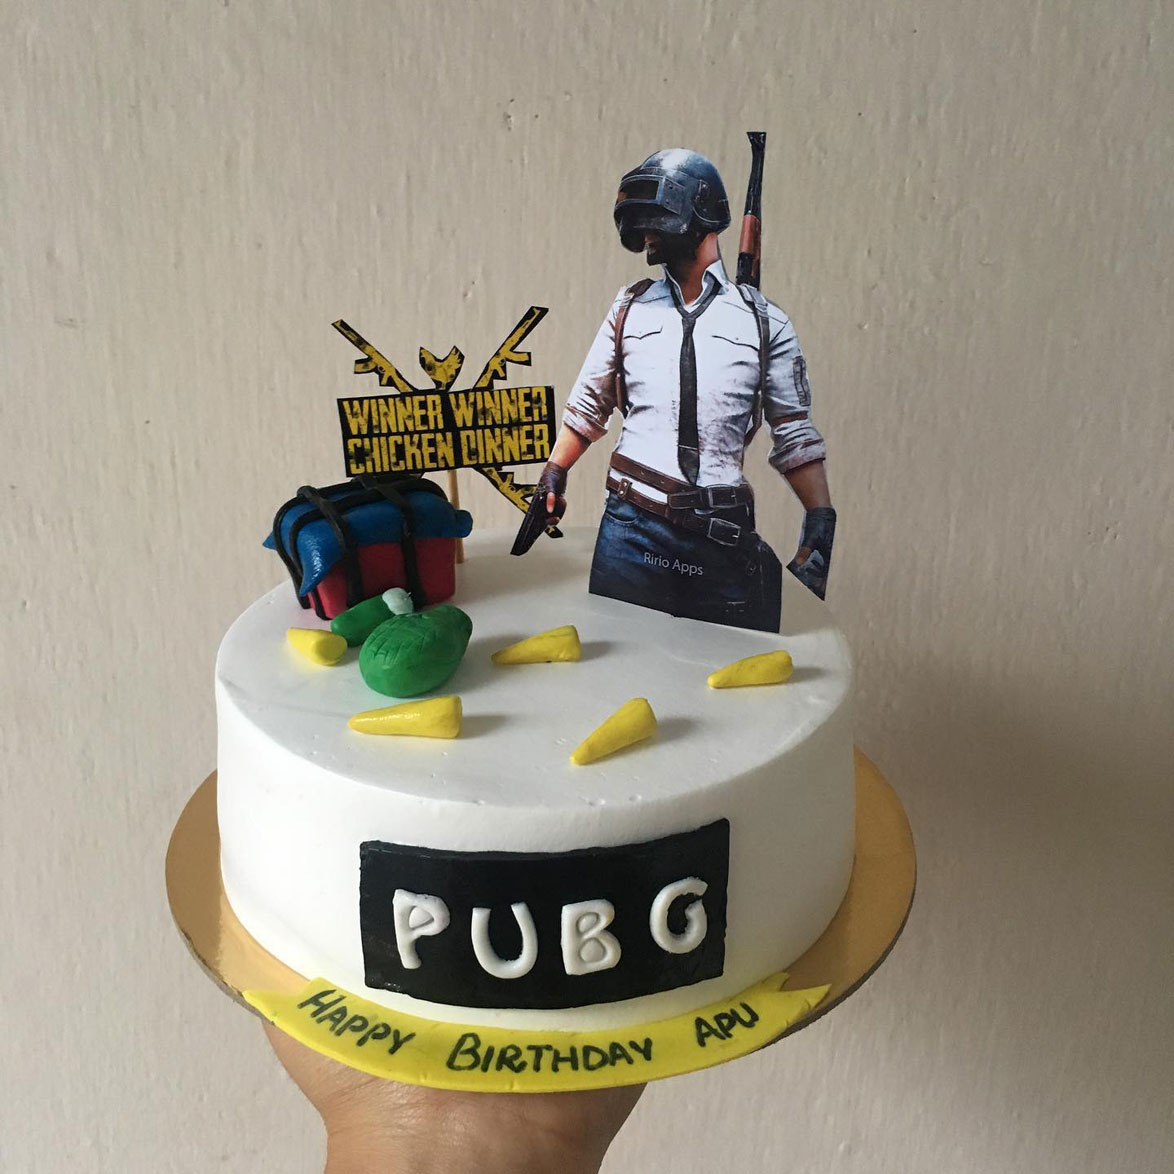 Pubg Theme Birthday Cake Decoration Ideas 2021/Pubg Theme Cake/Cake Design/ Pubg Lover Cake/CakeIdeas - YouTube